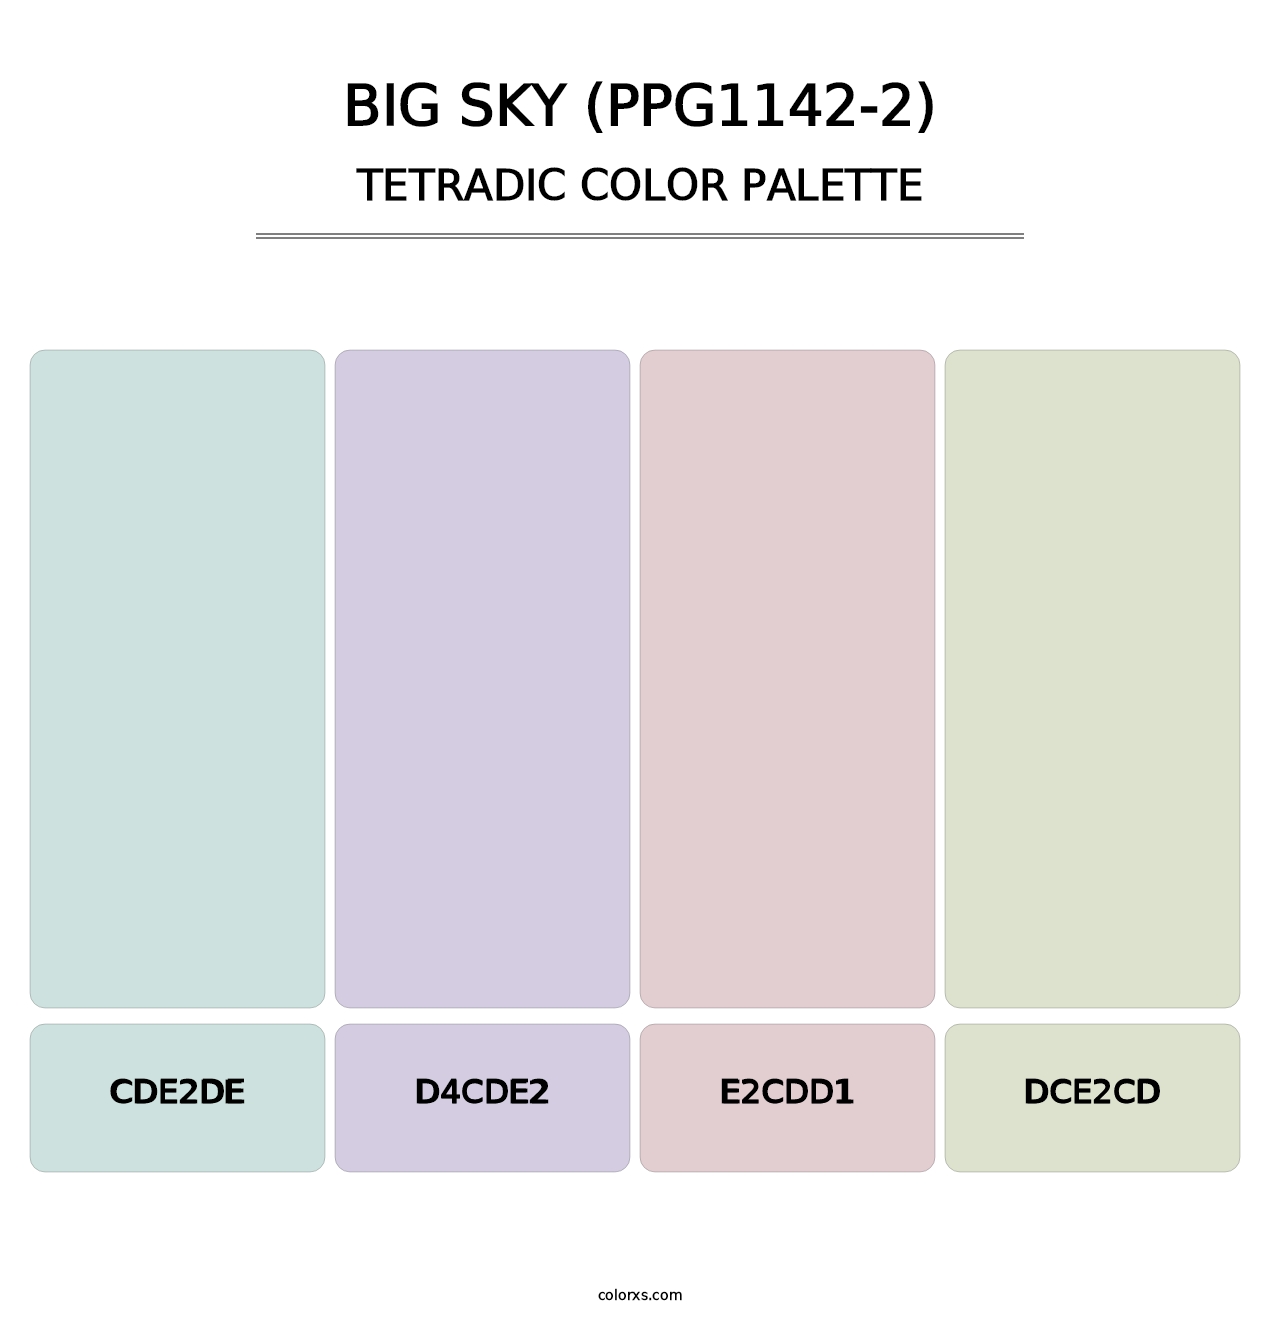 Big Sky (PPG1142-2) - Tetradic Color Palette